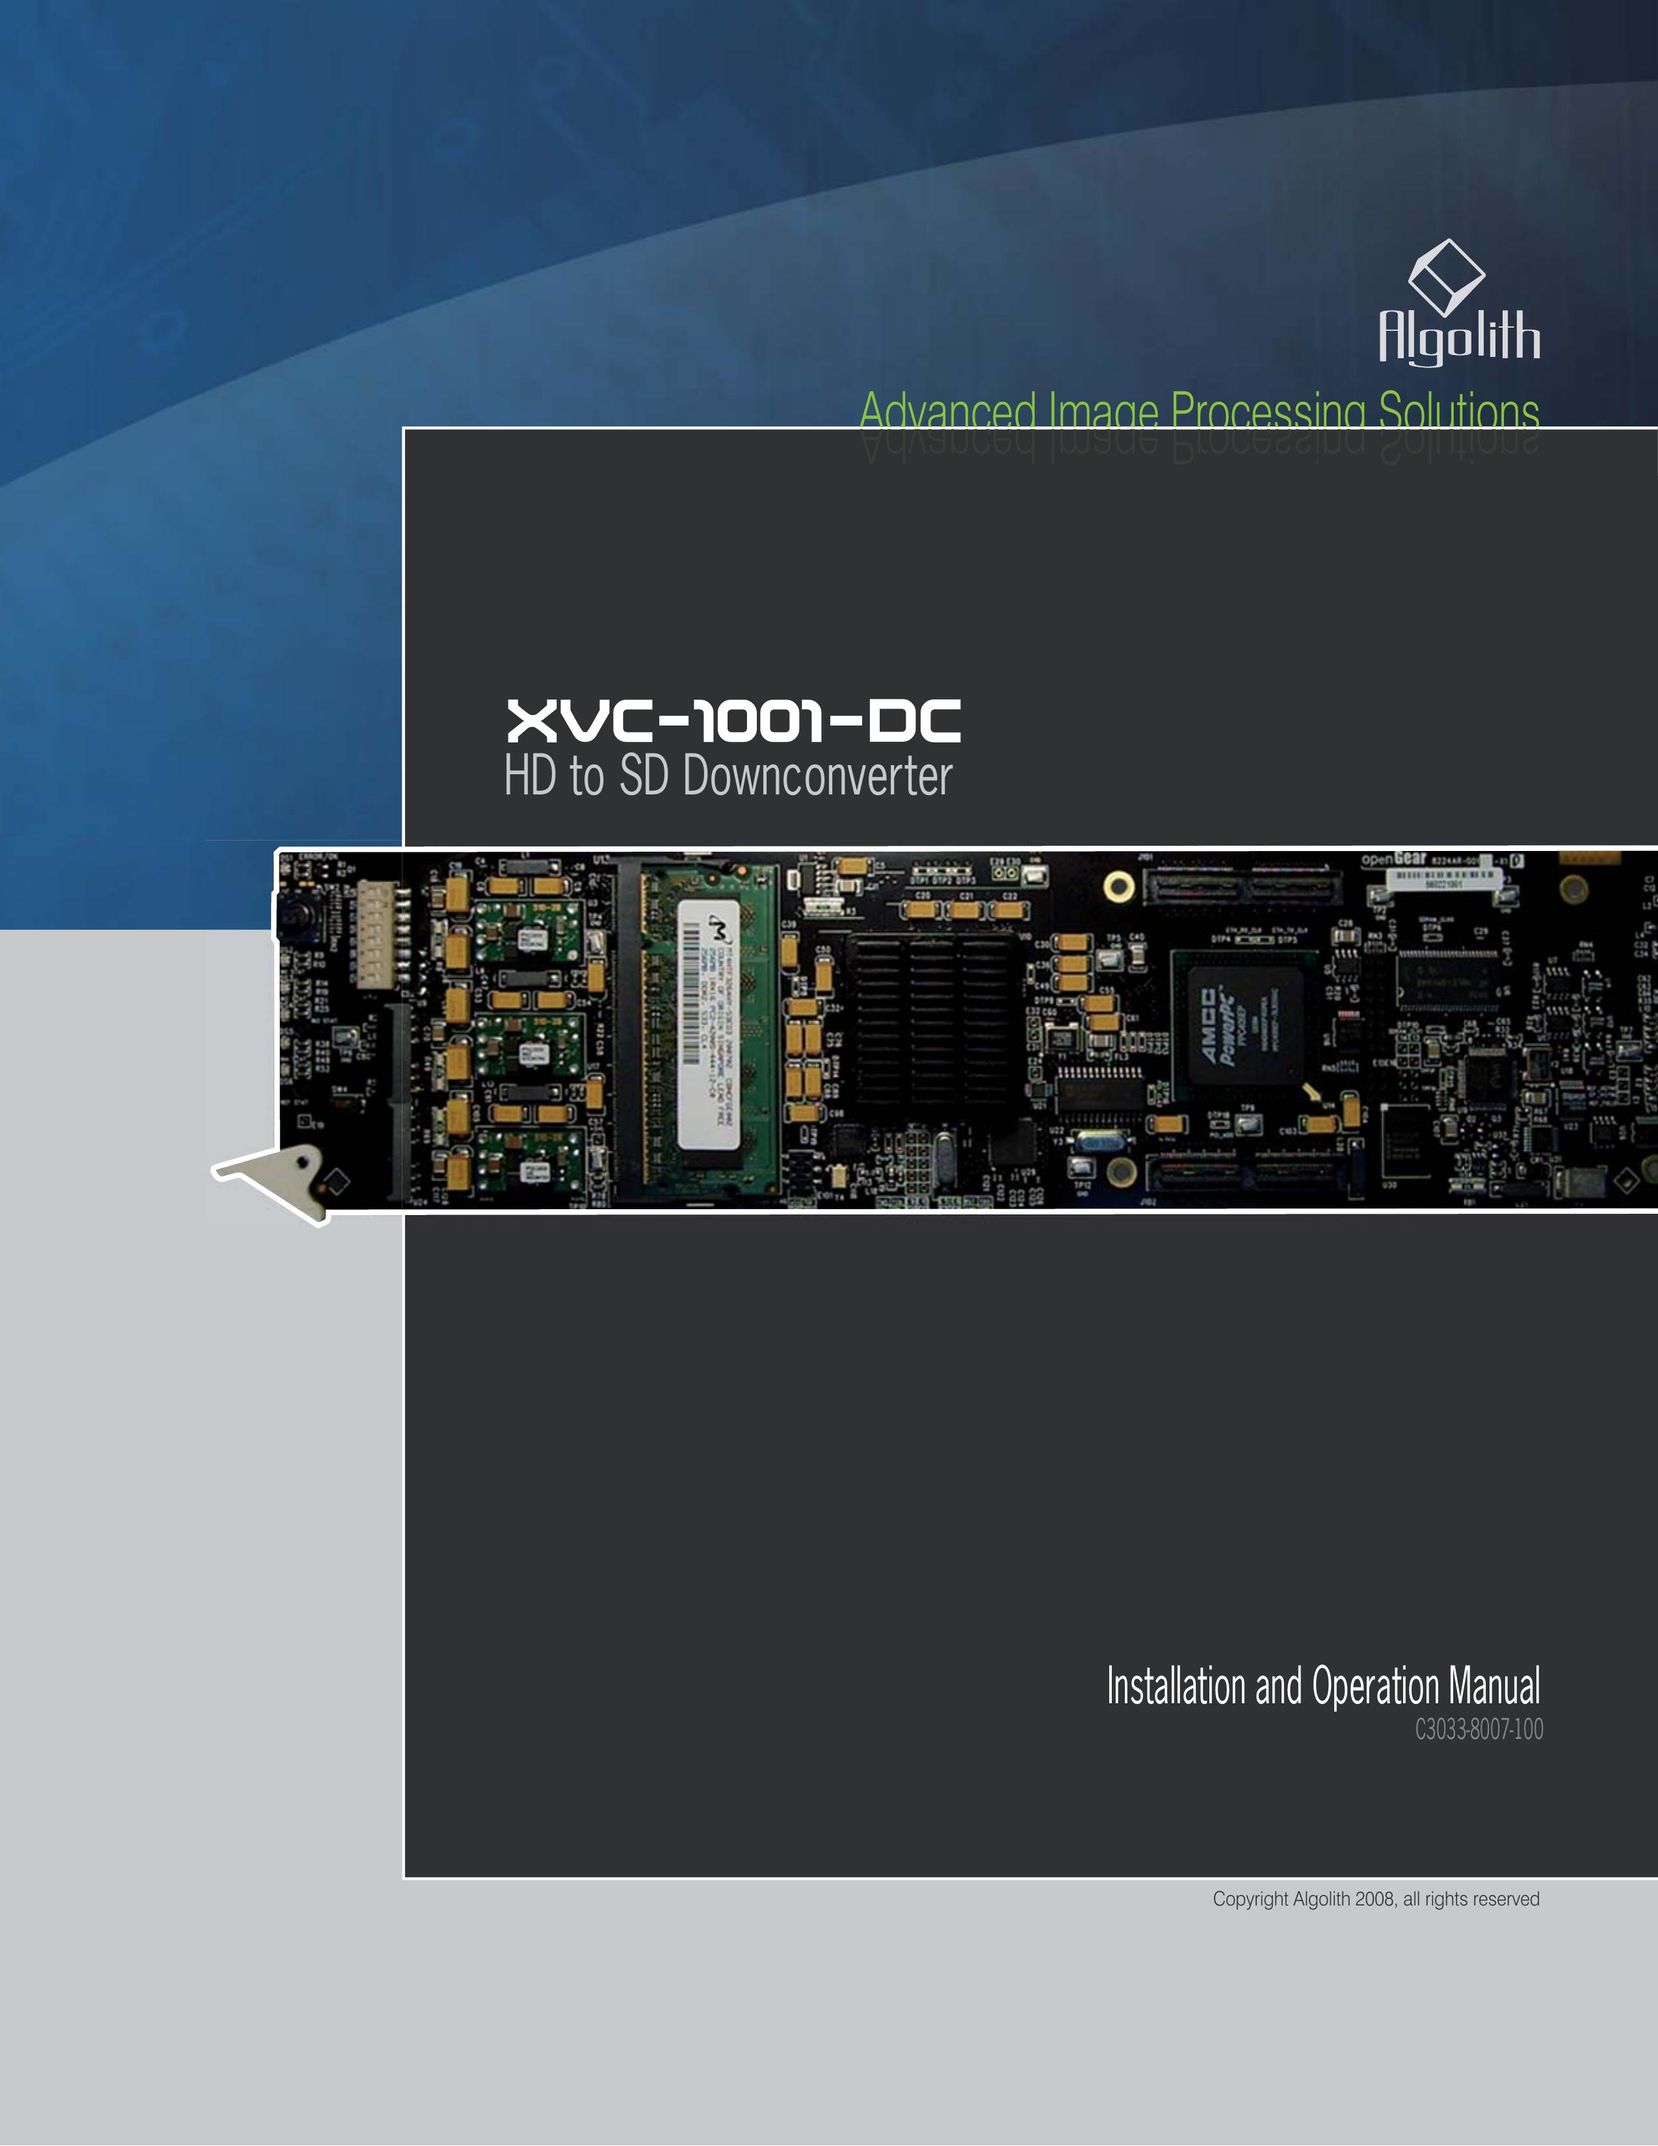 Algolith XVC-1001-DC TV Converter Box User Manual